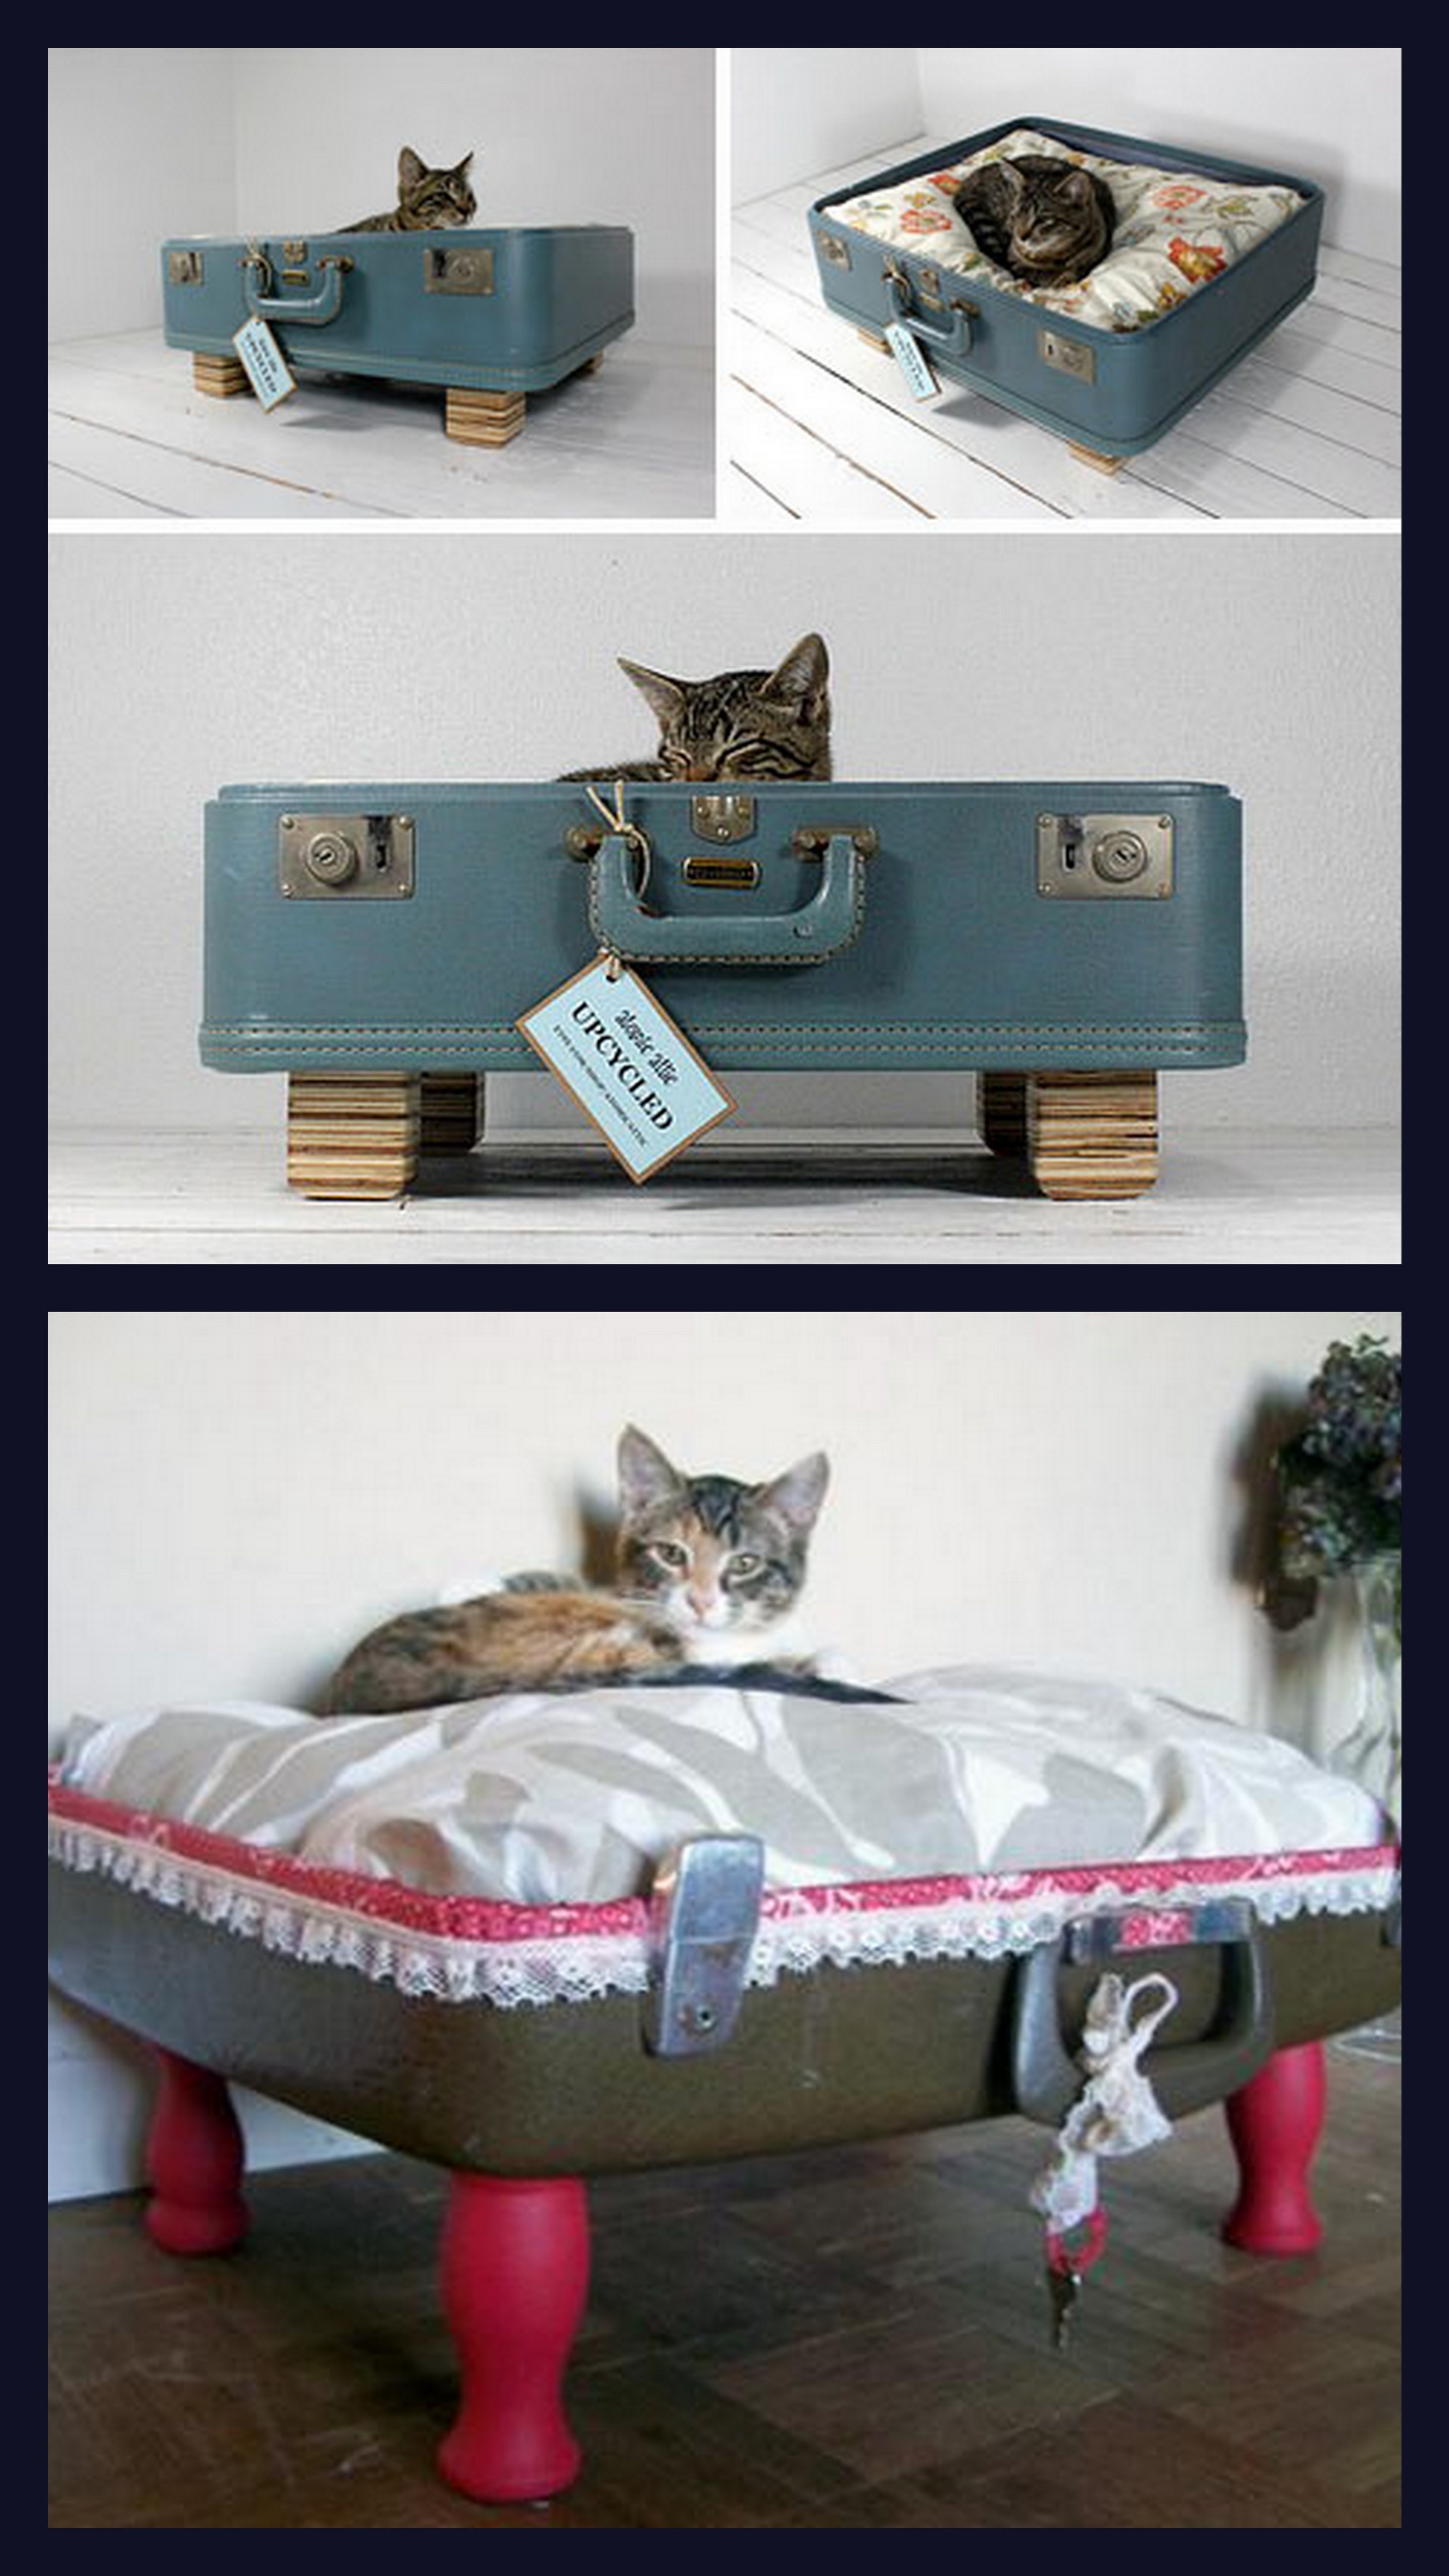 4.DIY Pet Bed